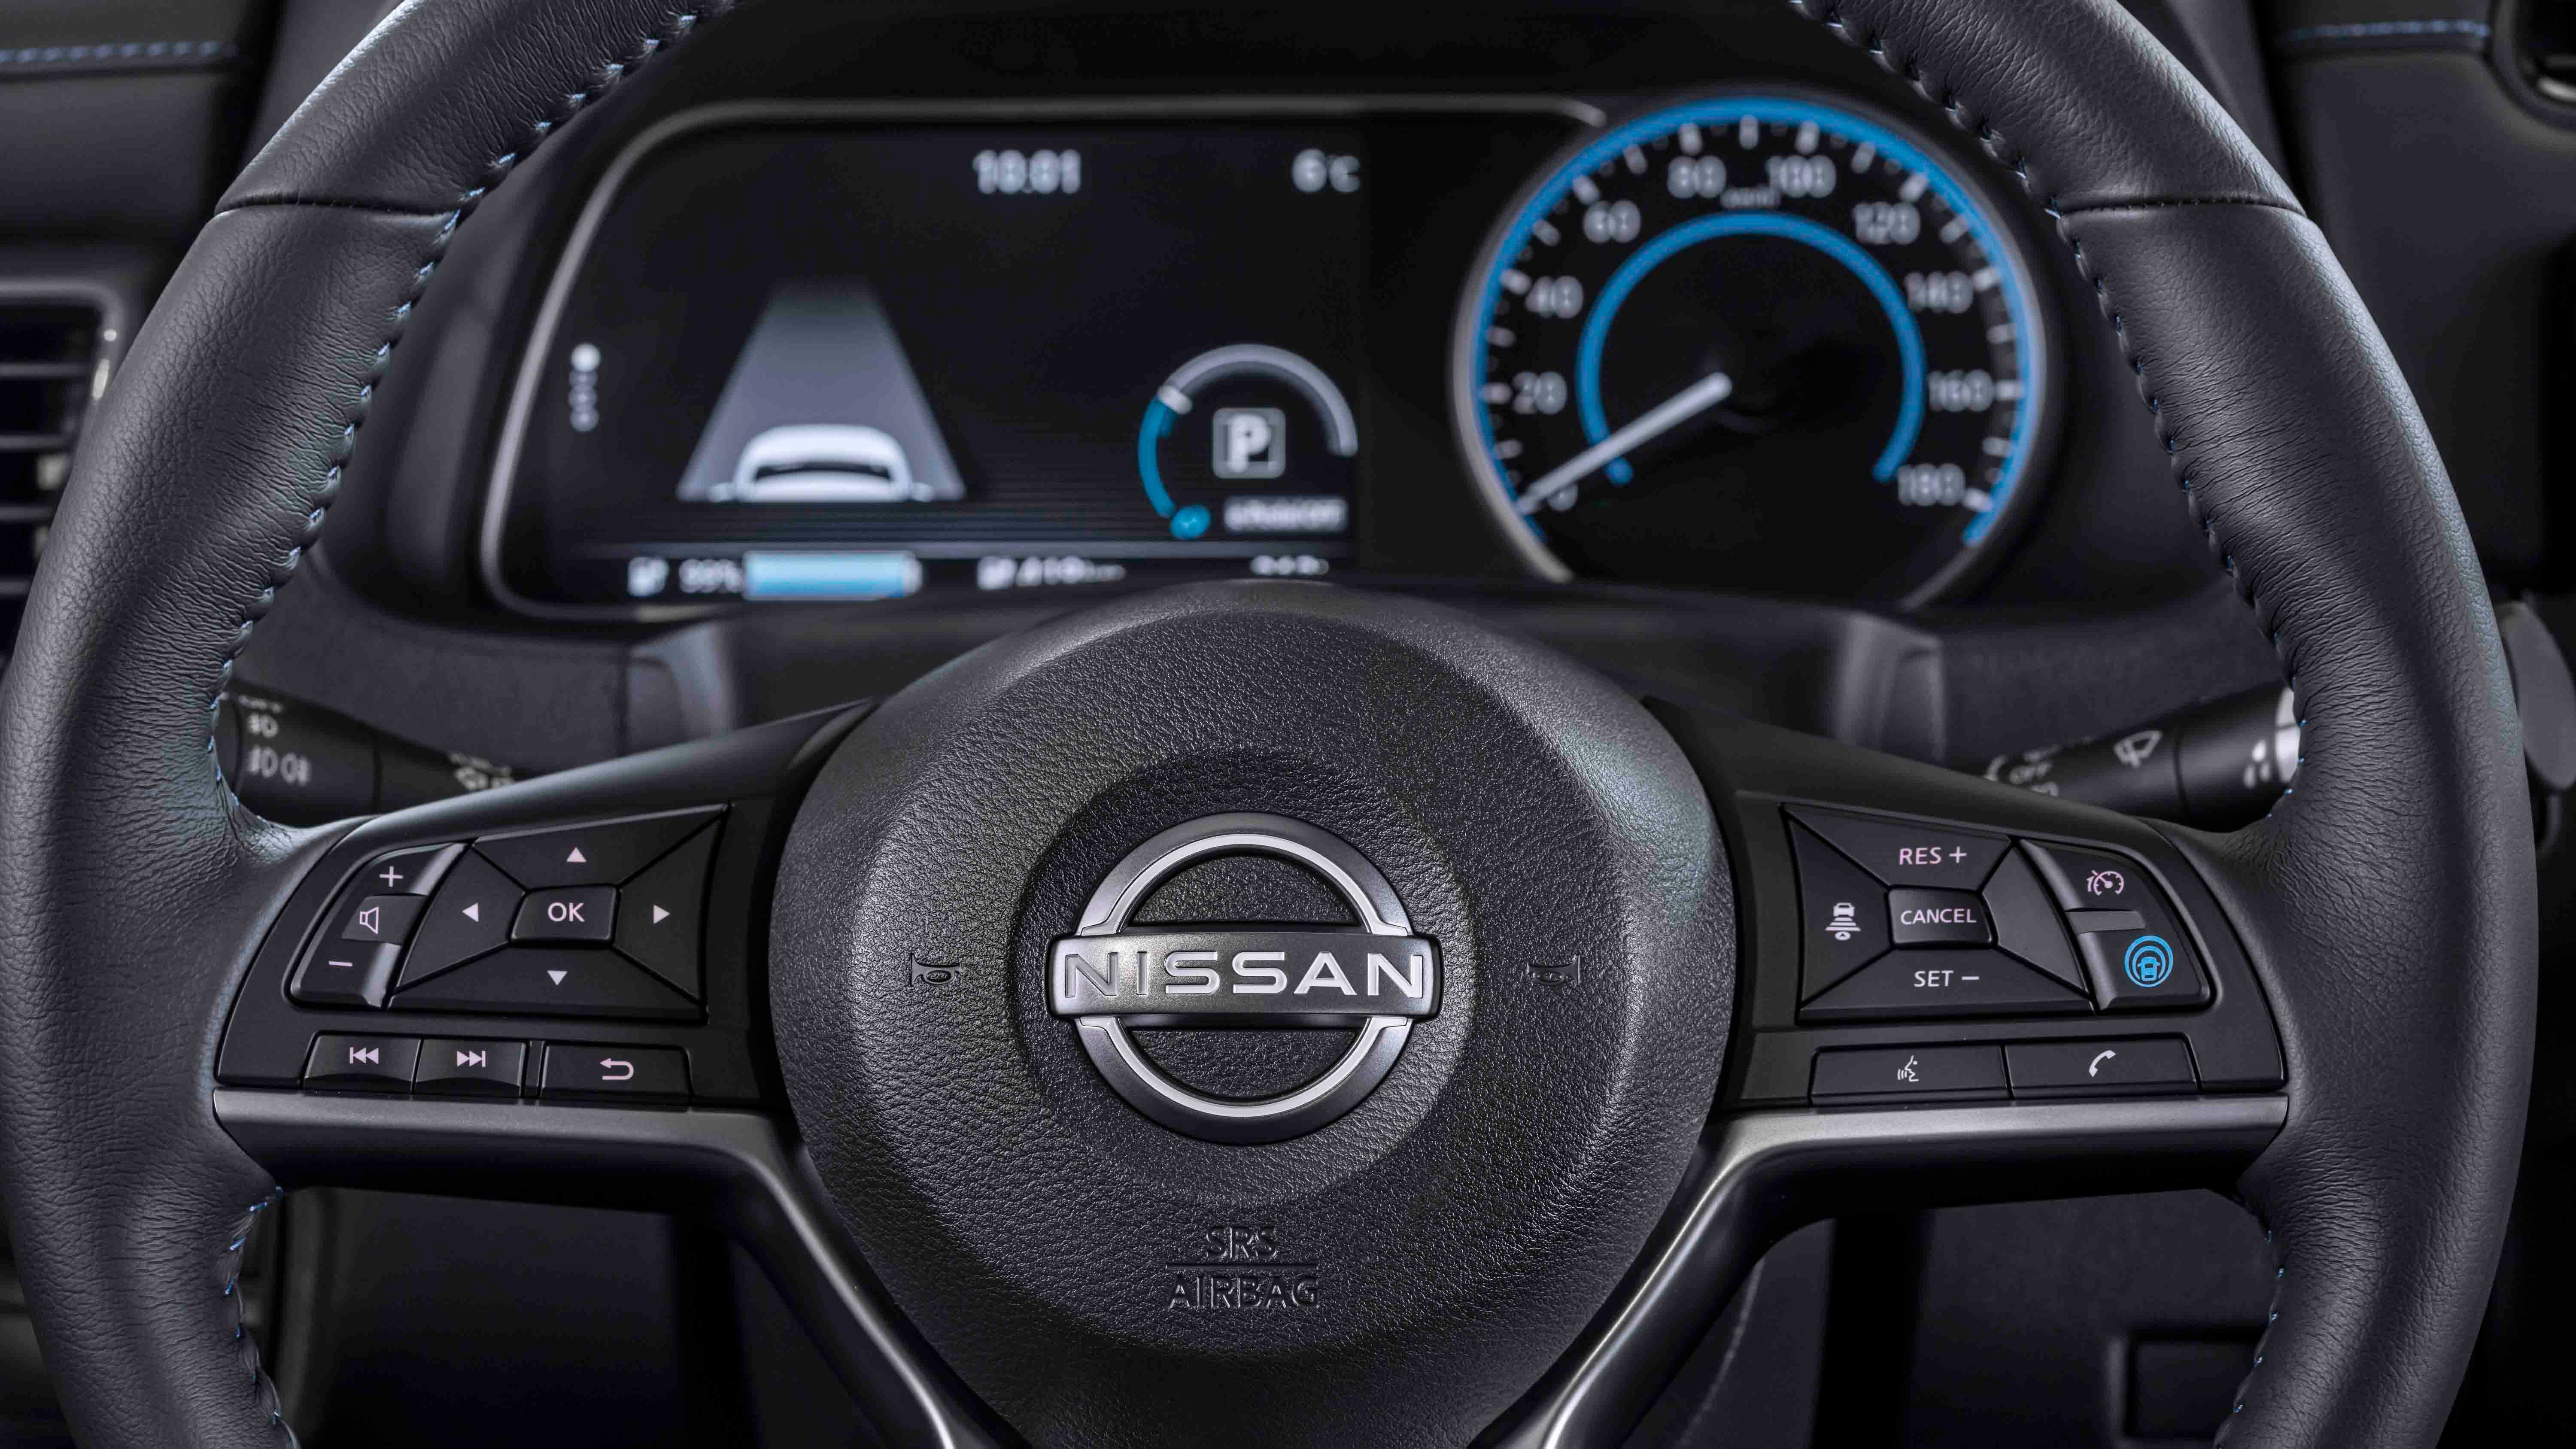 Nissan Leaf digital dials